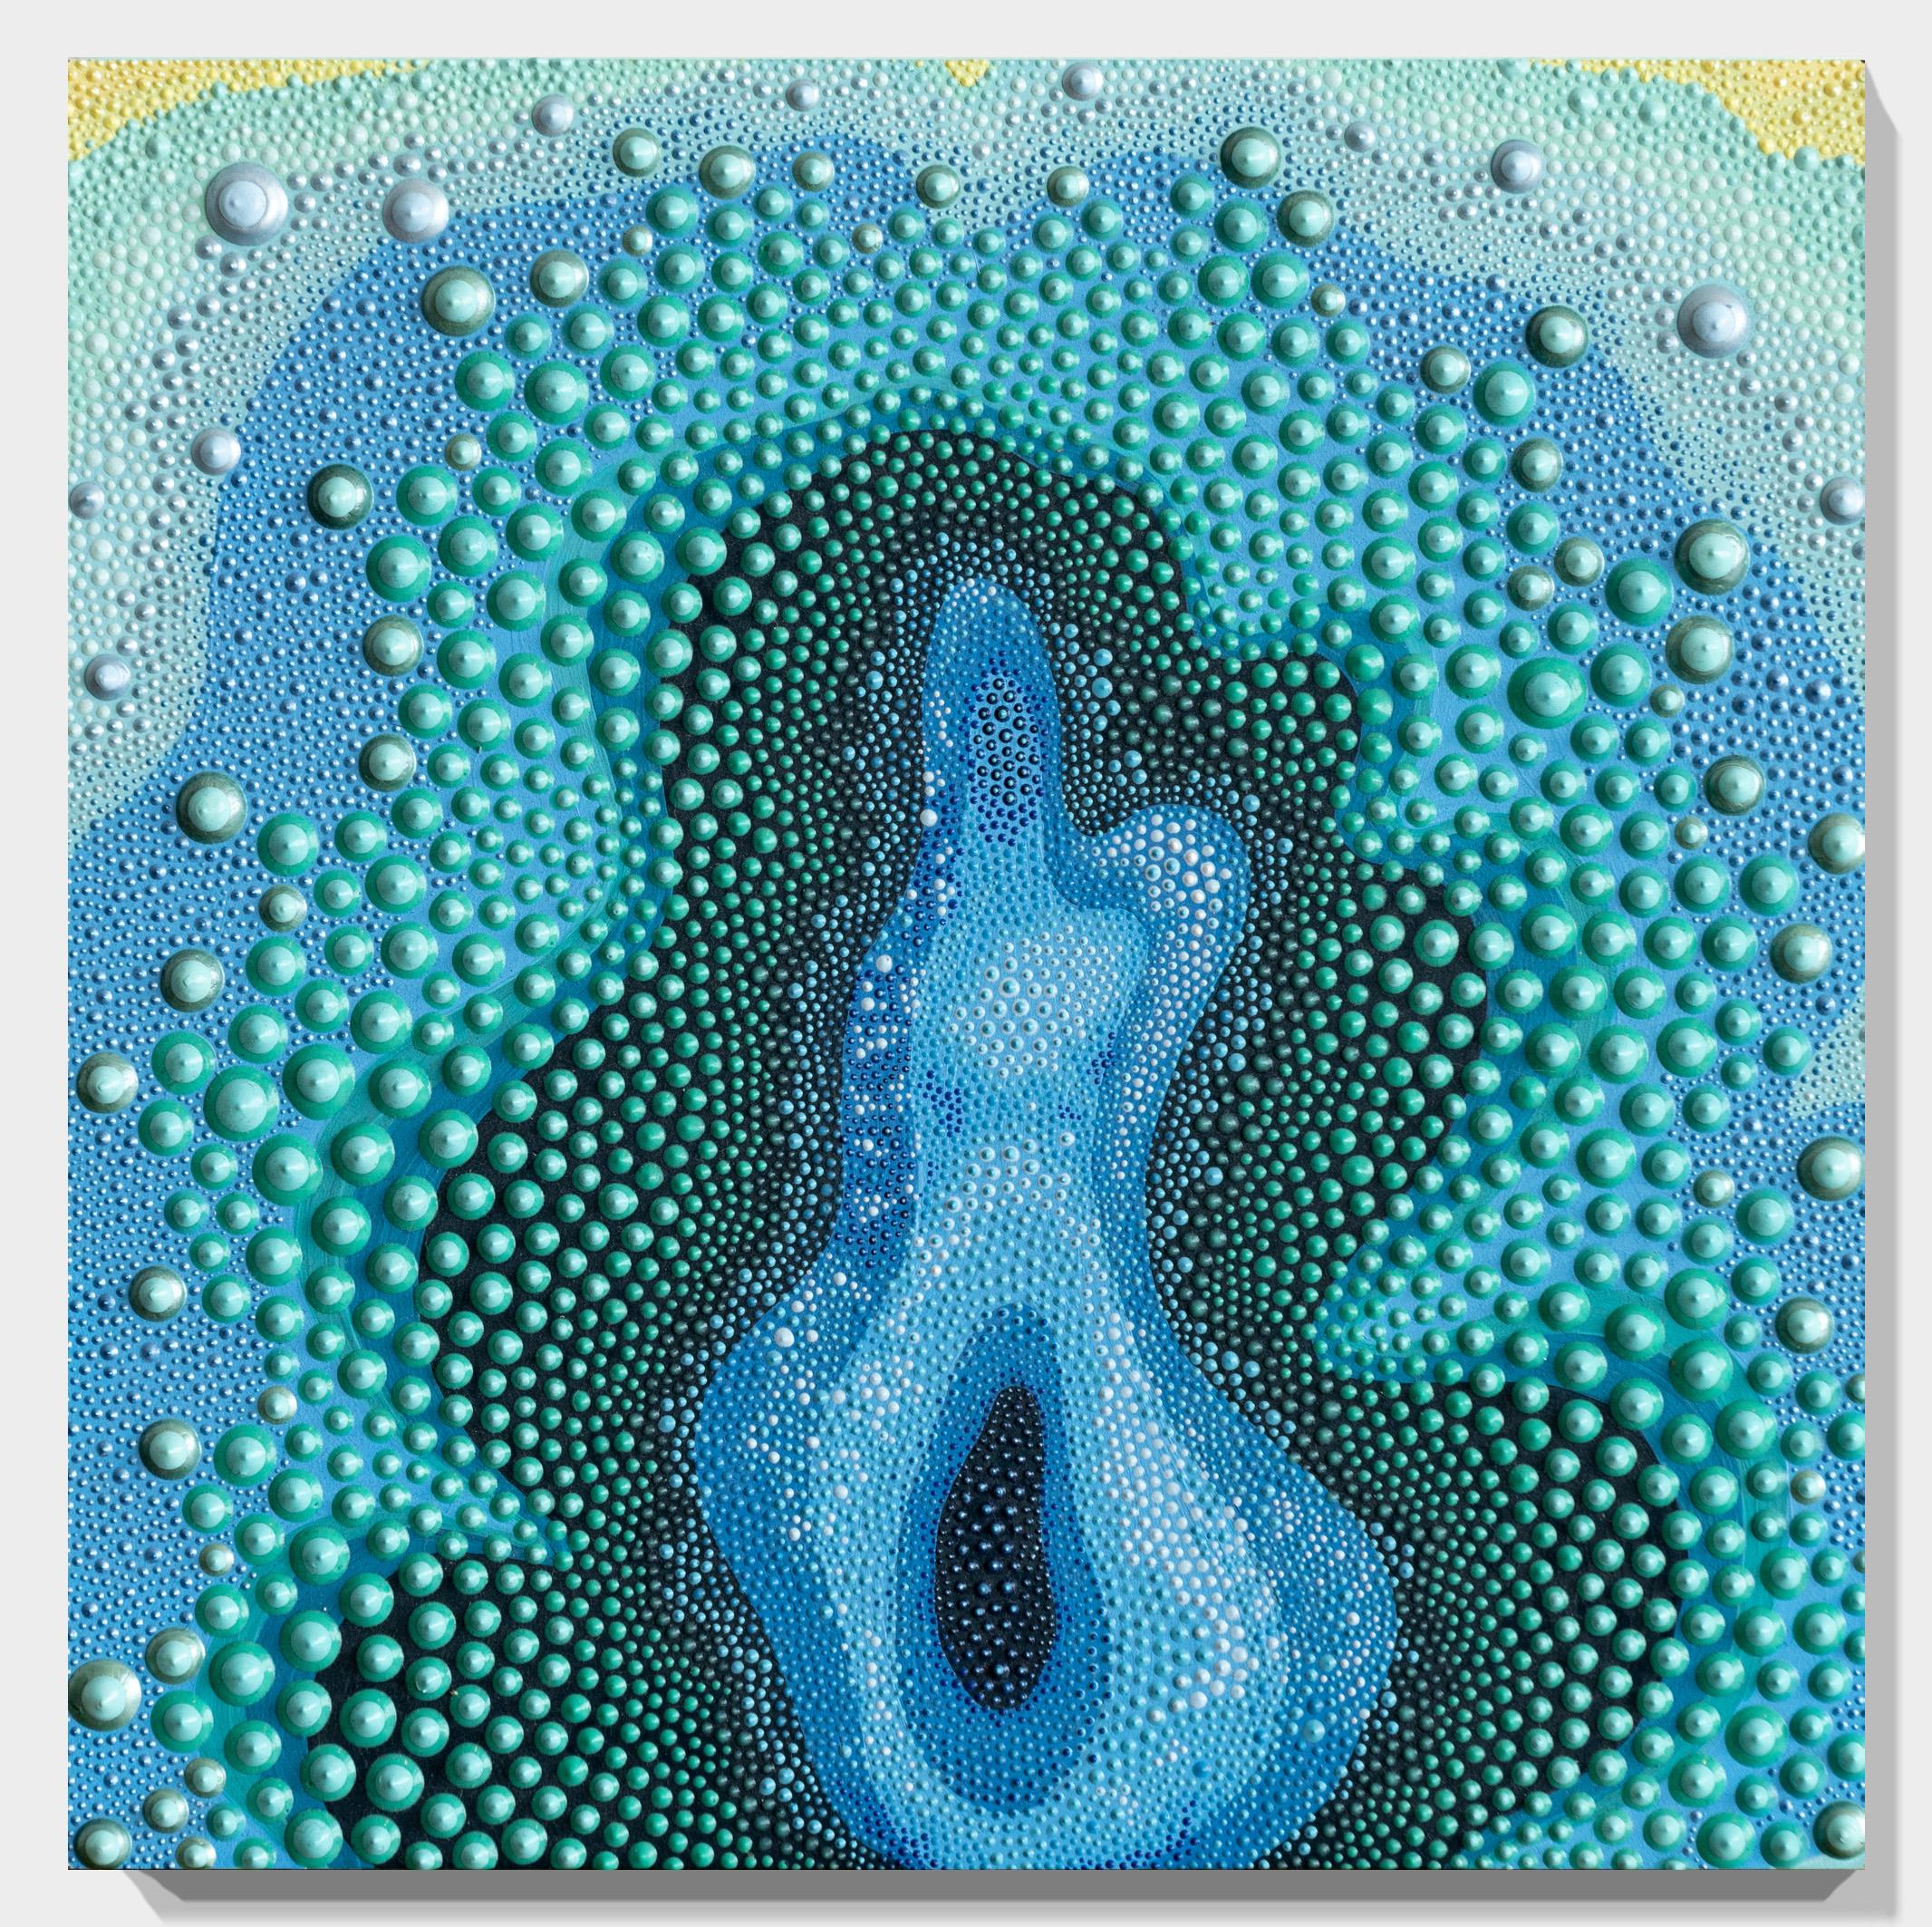 „Cultured Clam“ Aquatisch inspirierte, dimensionale Farbe auf Leinwand im Angebot 5